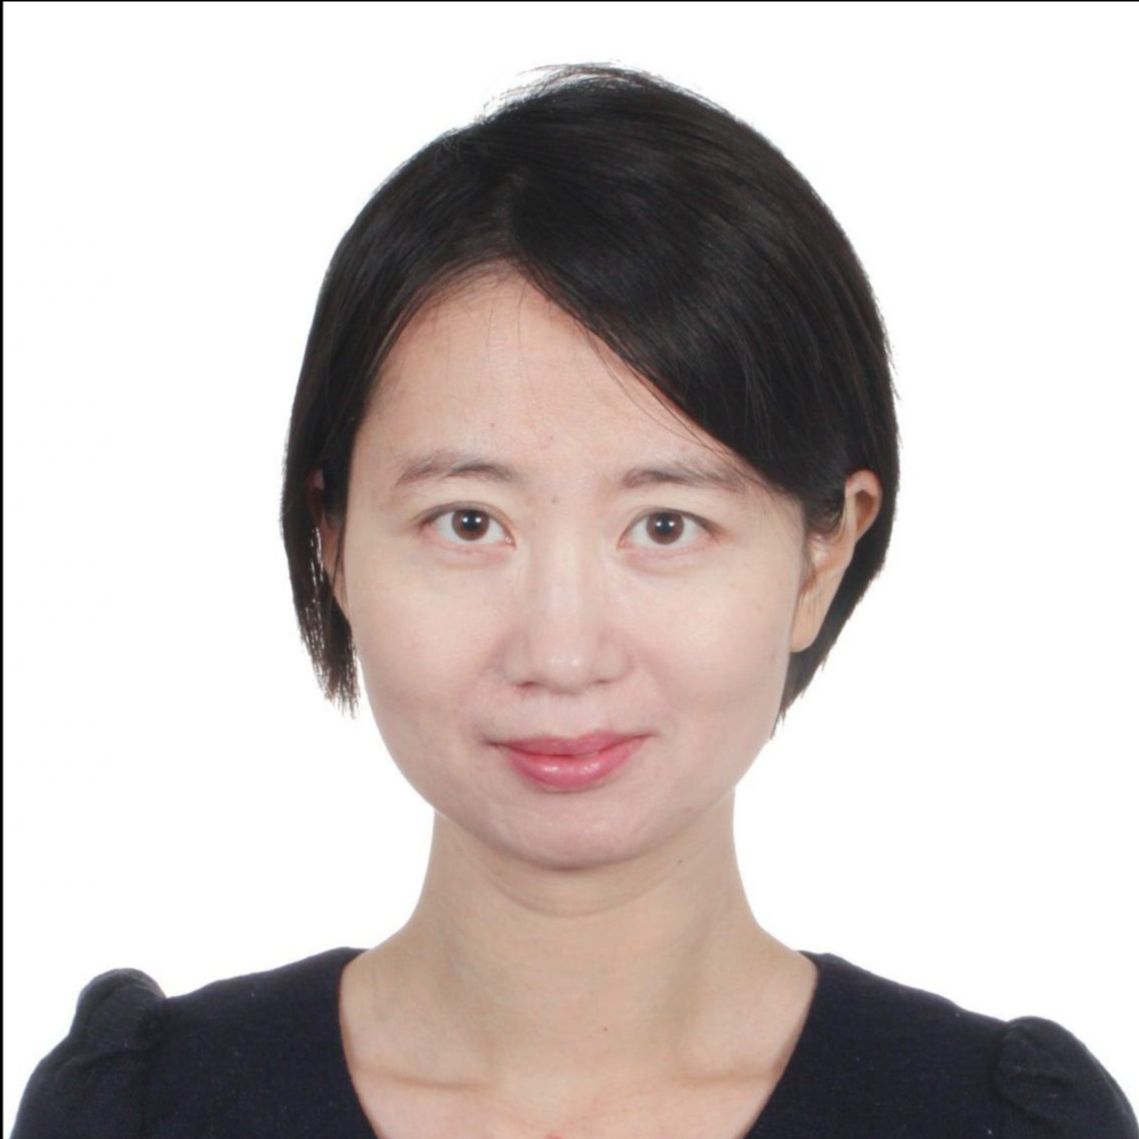 Associate Professor Simin Gao, wearing a black top